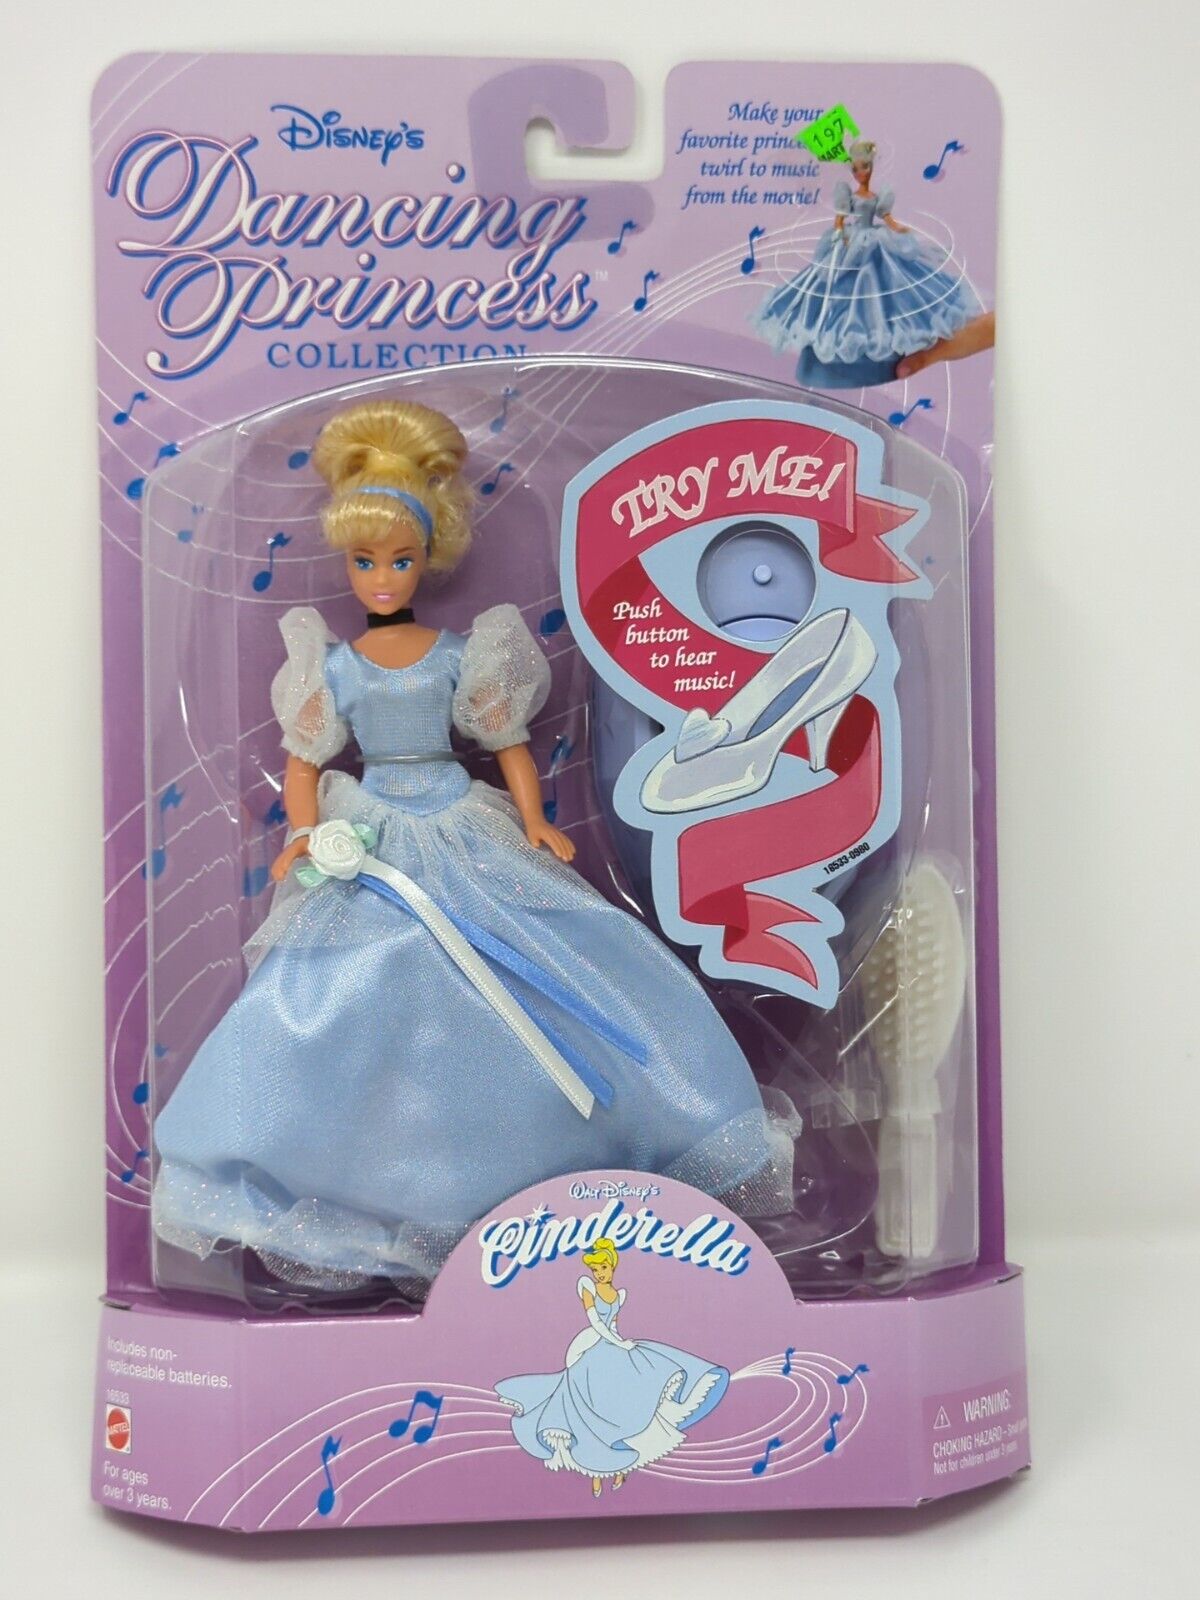 1996 Disney's Dancing Princess Cinderella Mattel 16533 New